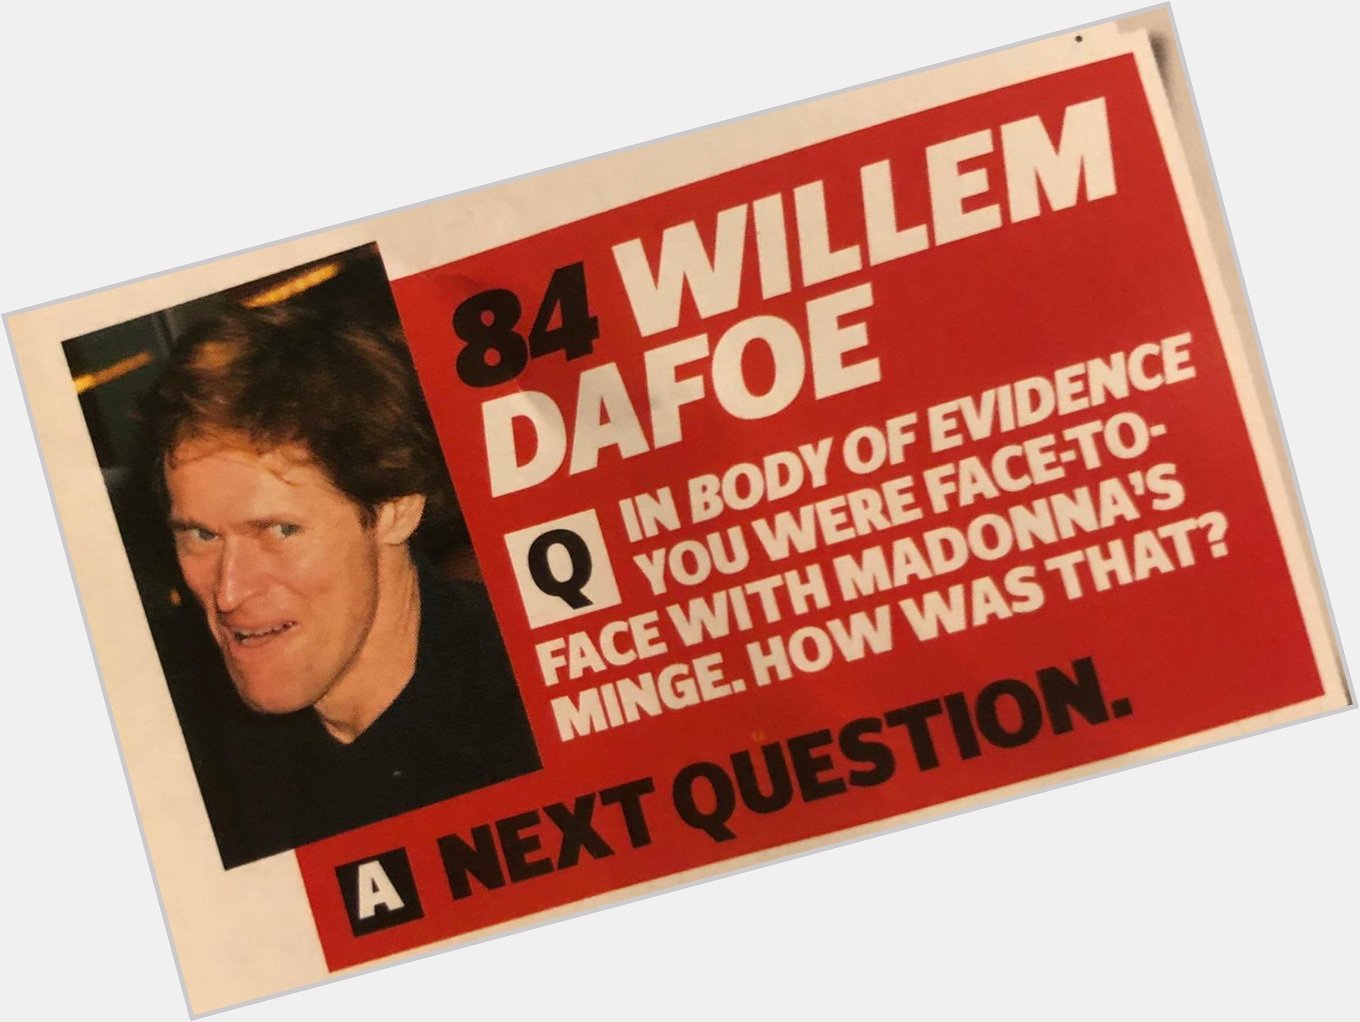 Happy birthday Willem Dafoe 